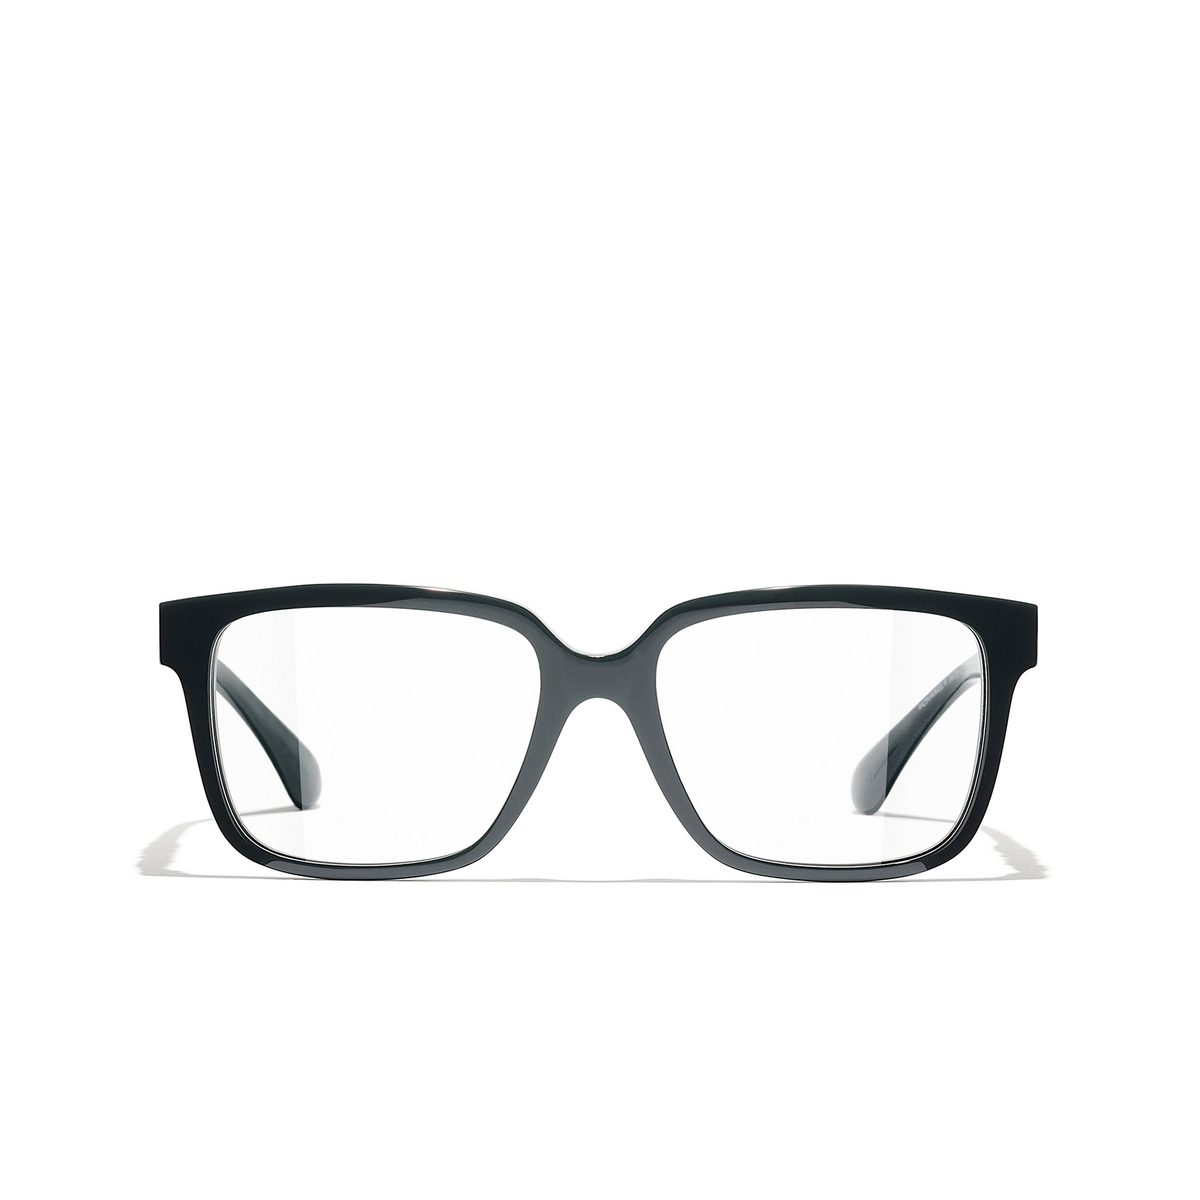 CHANEL square Eyeglasses 1459 Dark Green - front view